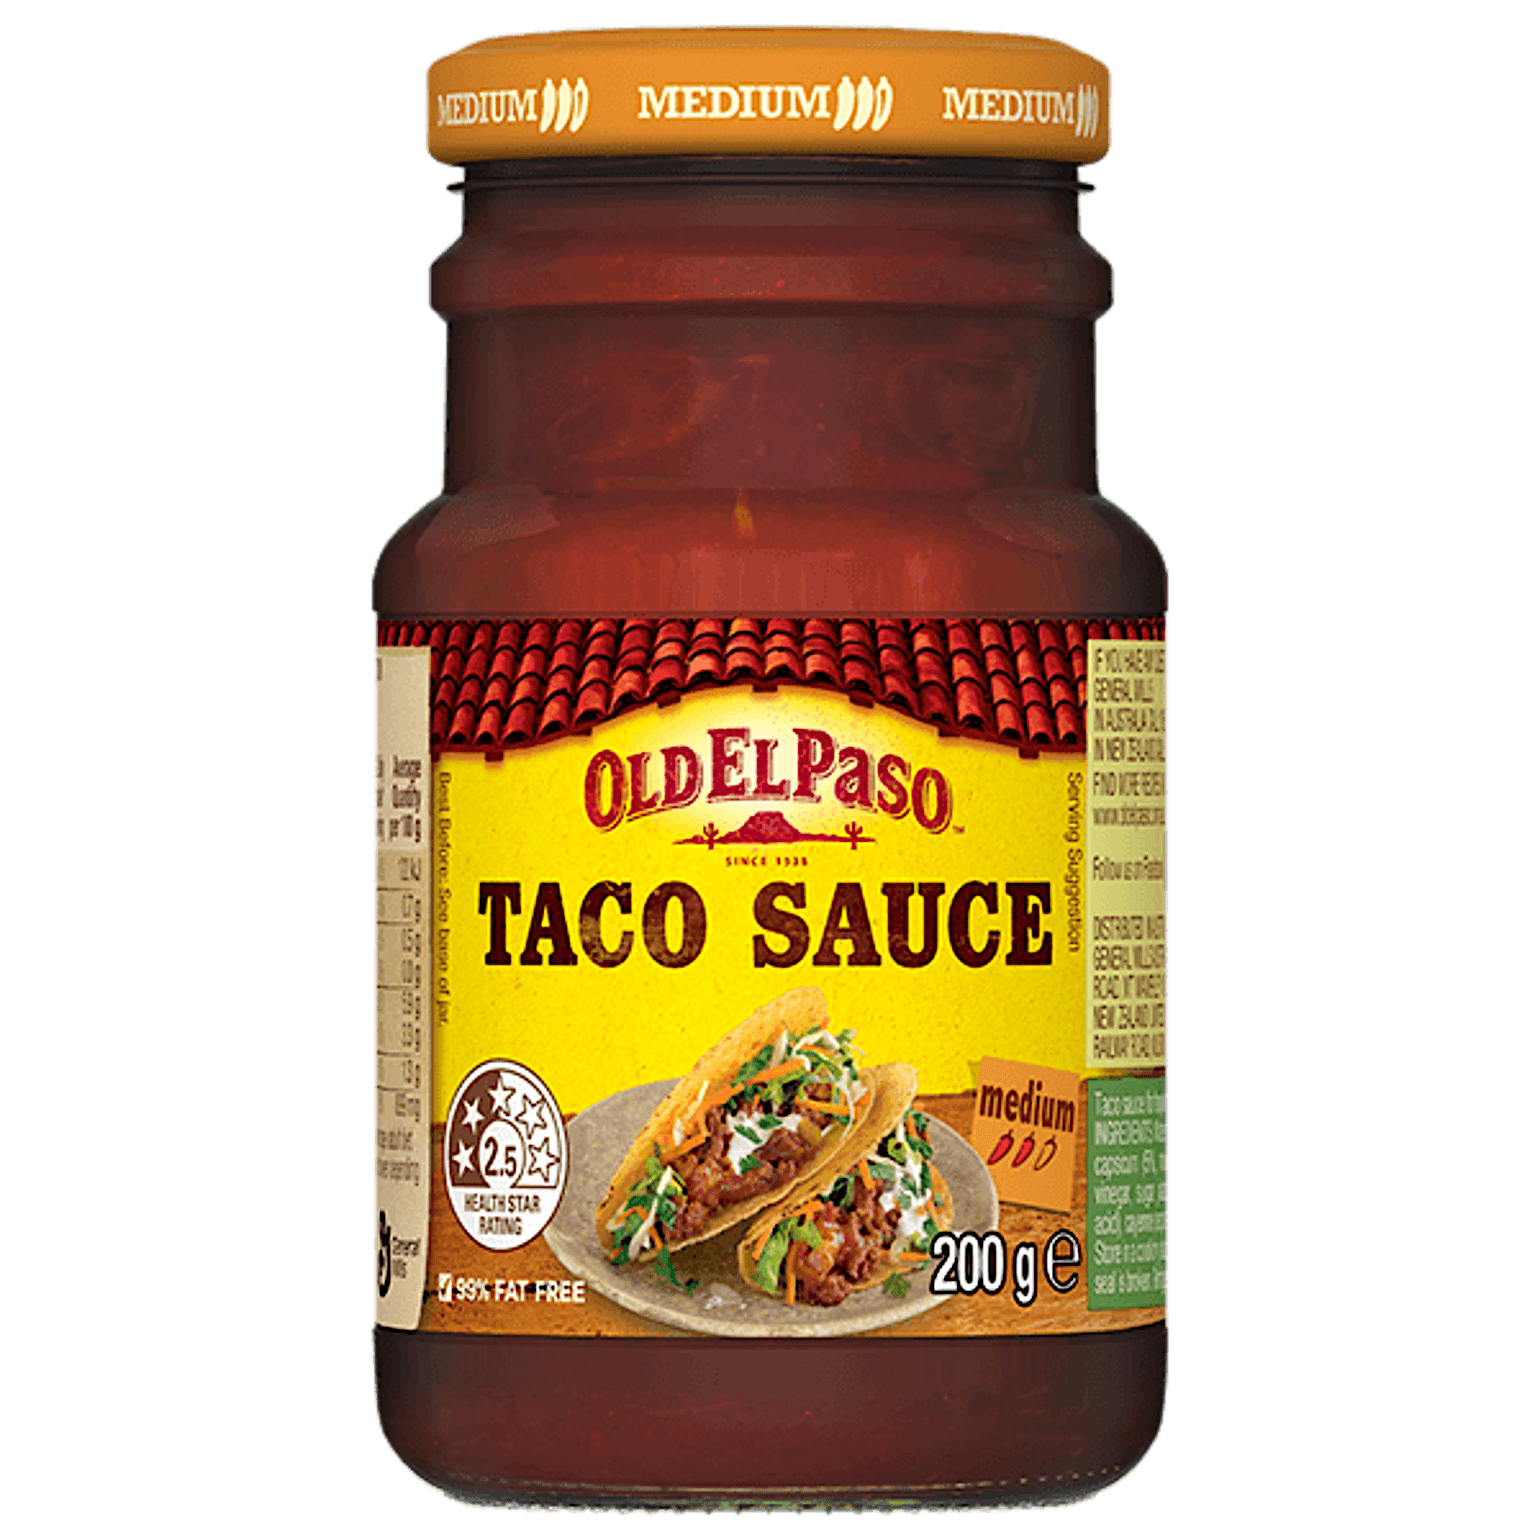 a glass jar of Old El Paso's medium taco sauce (200g)